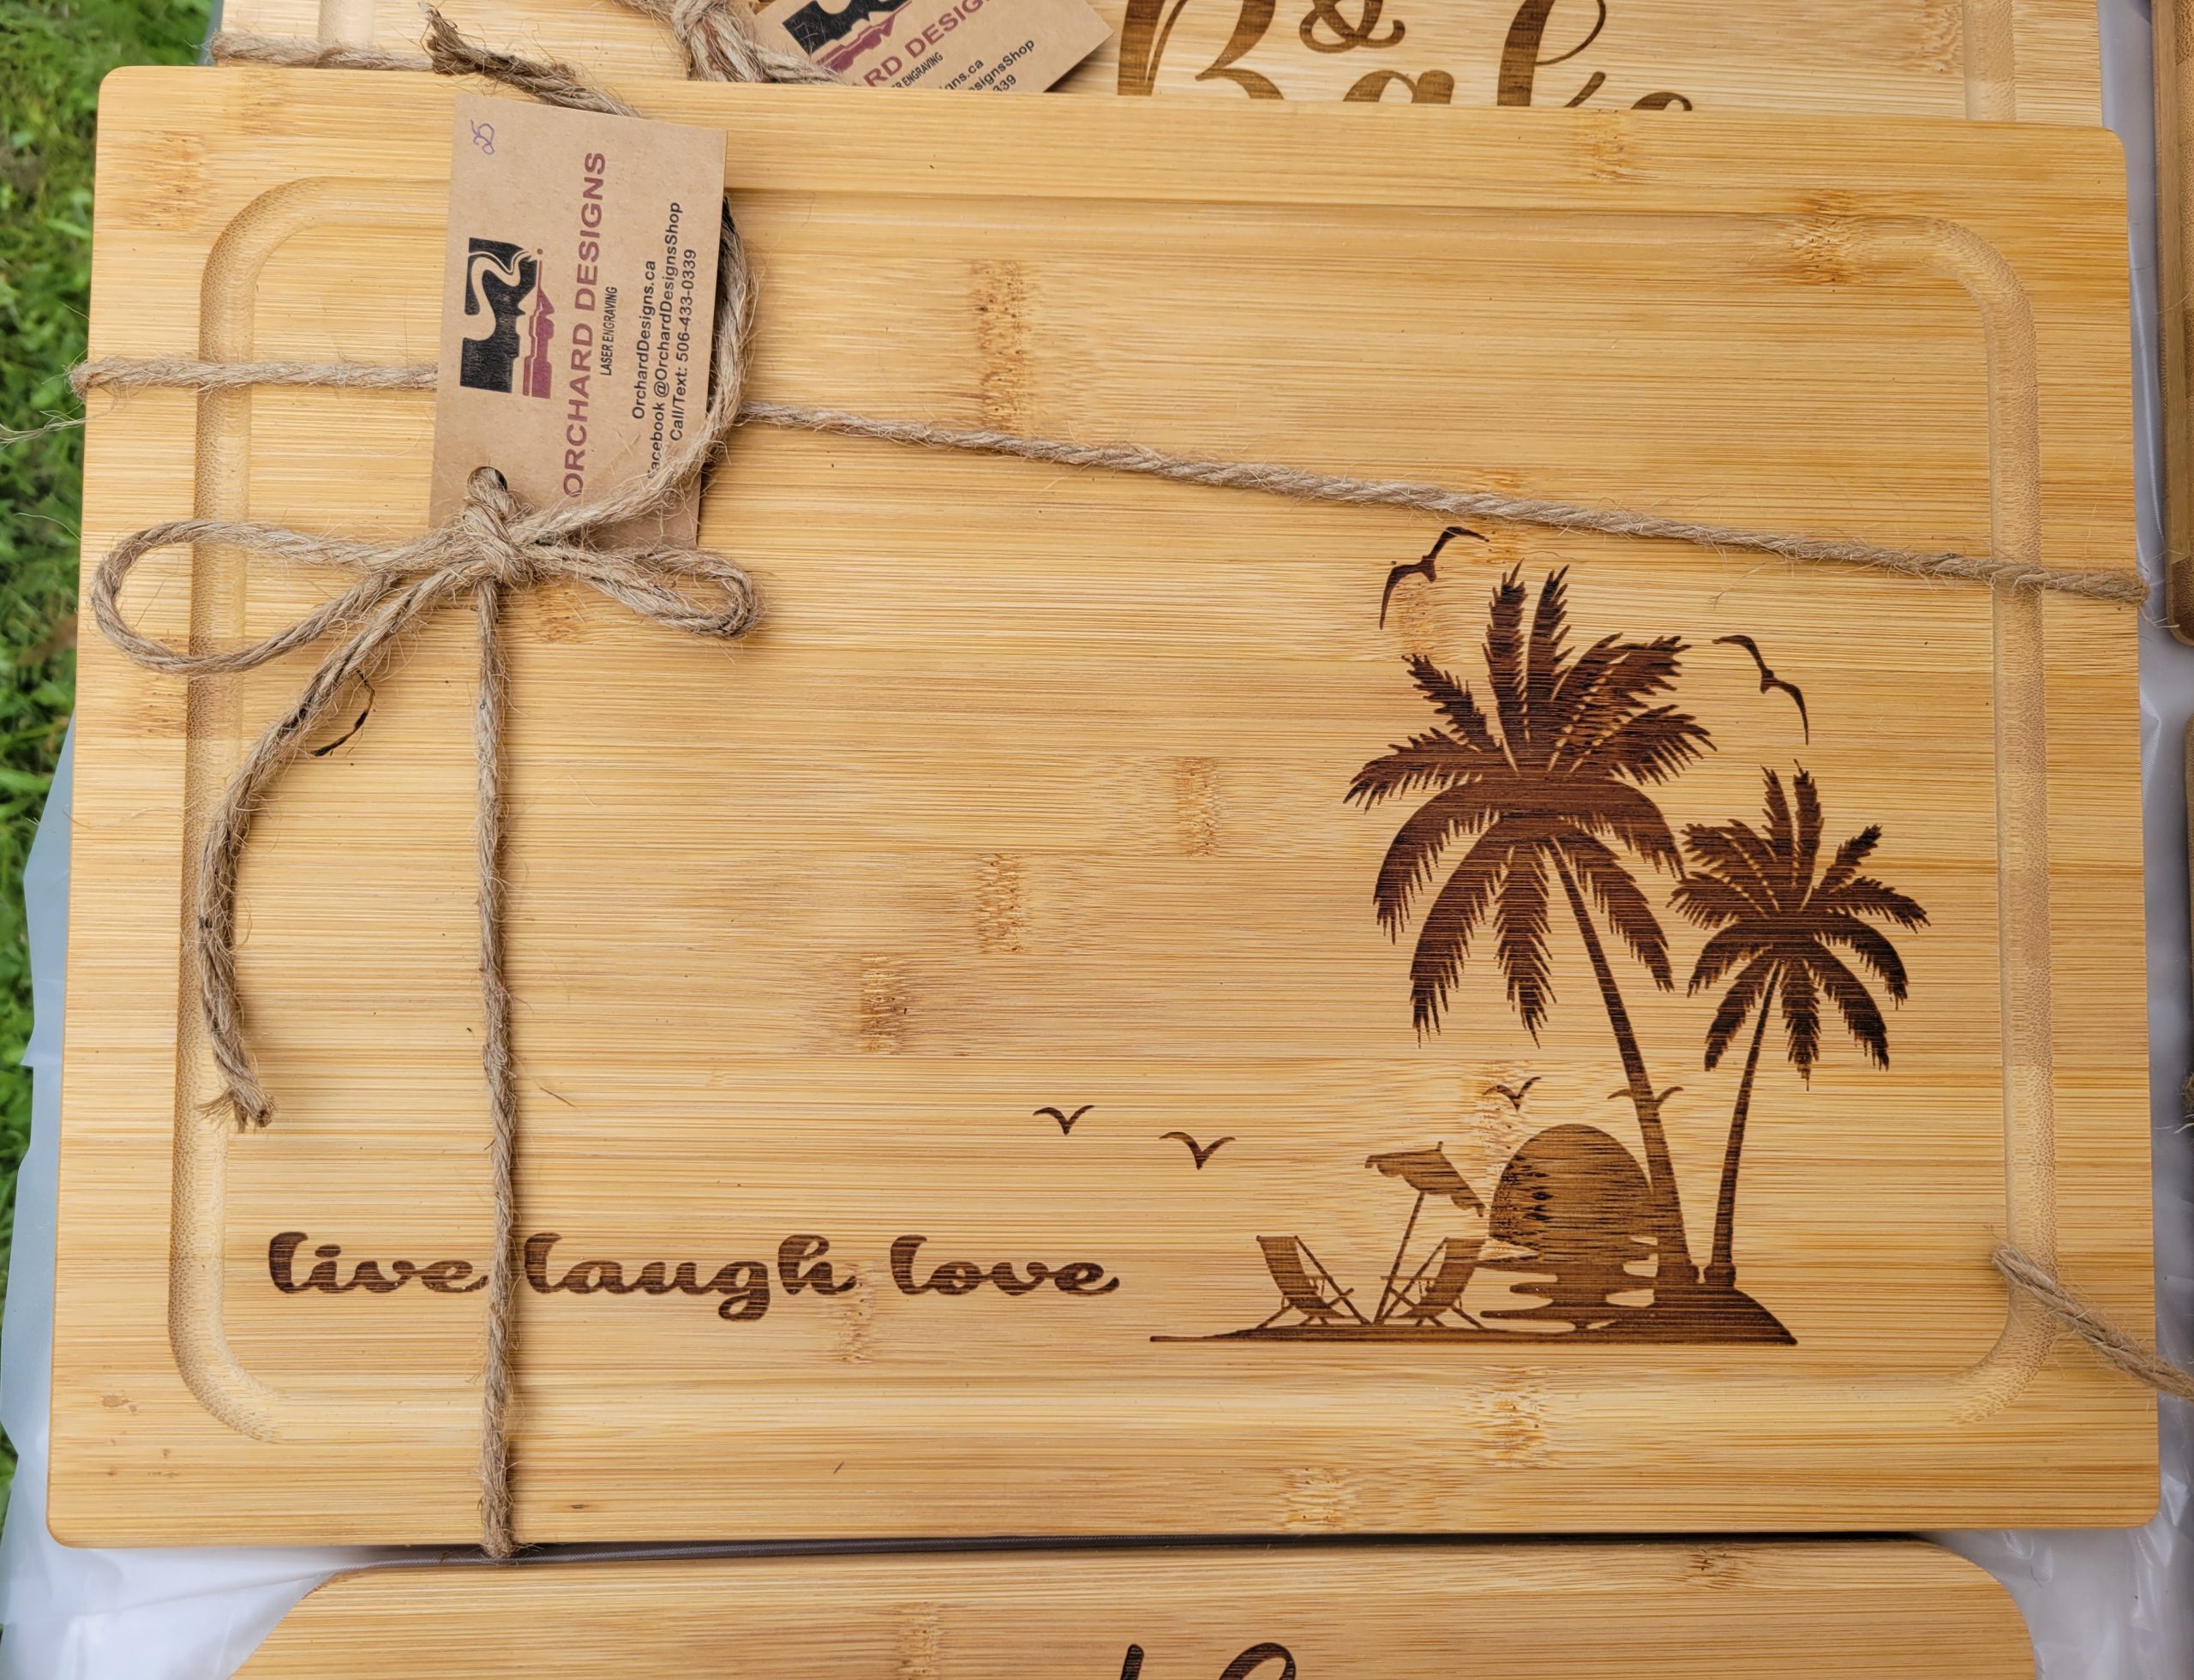 laser-engraved-bambo-cutting-board-Livelaughlove